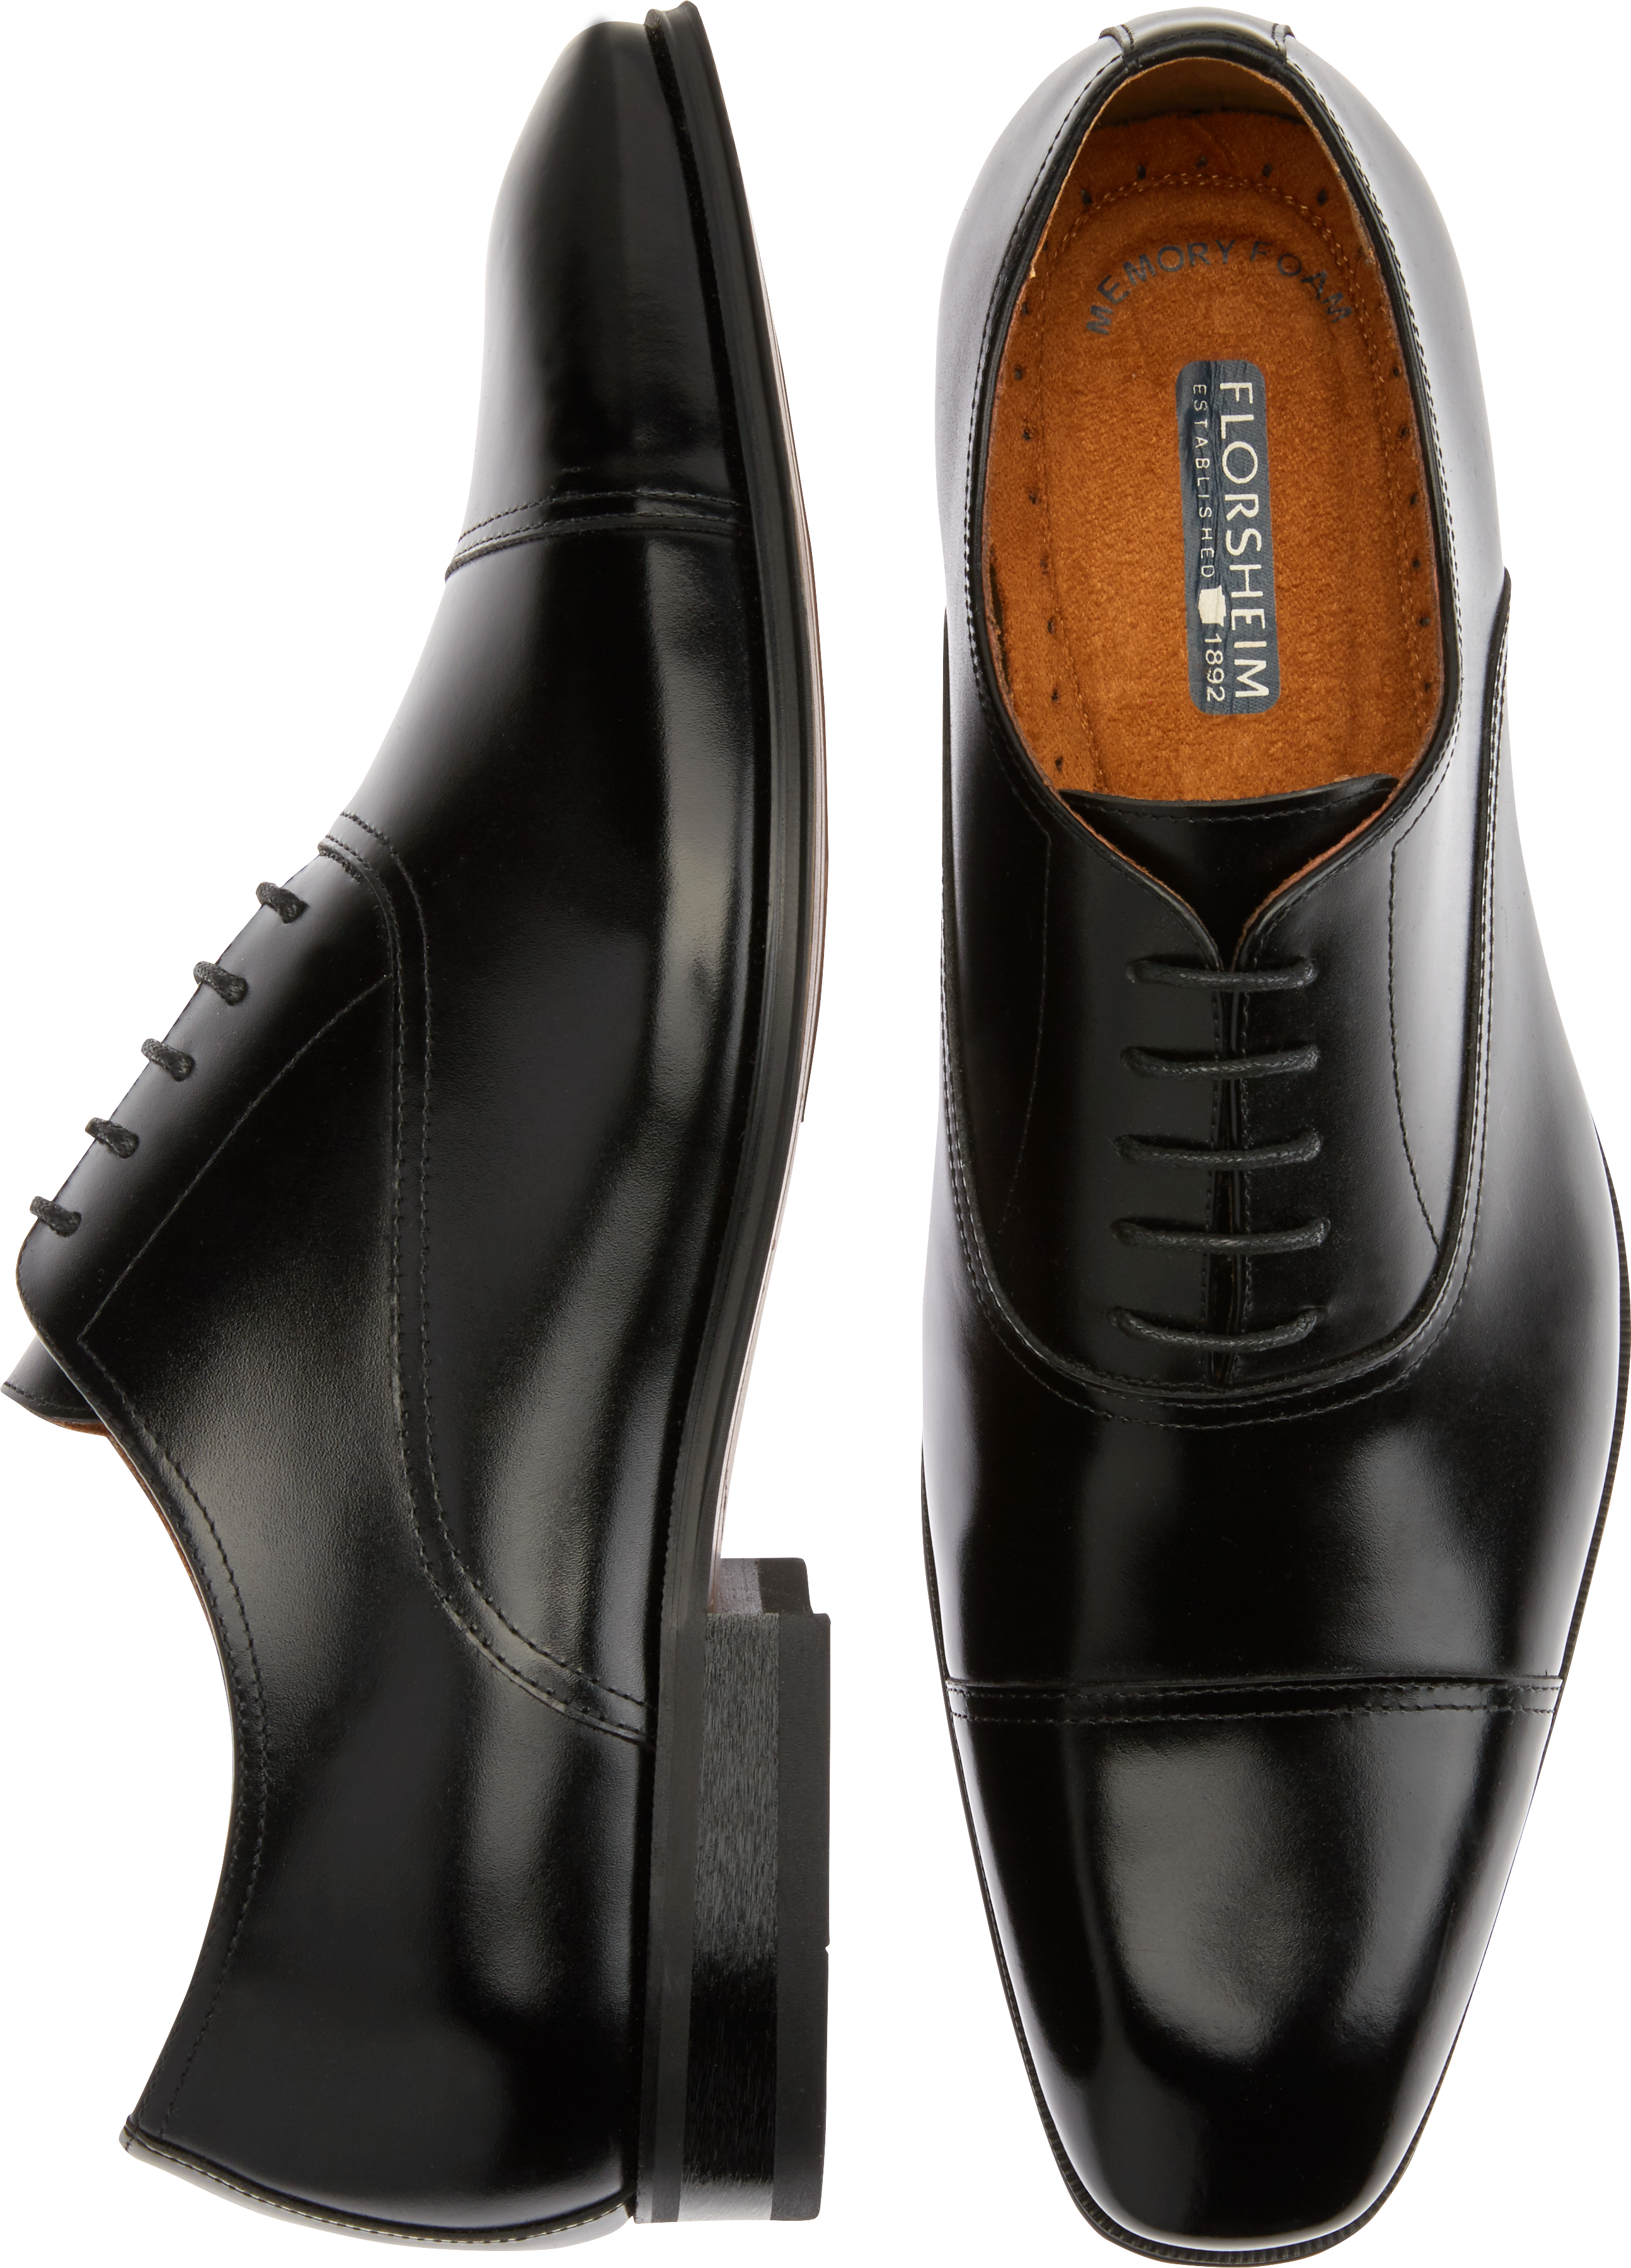 Faranzi Tuxedo Oxford Patent Leather Plain Toe Wedding Dress Shoes for Men Lace up Comfortable Formal Business Shoes 